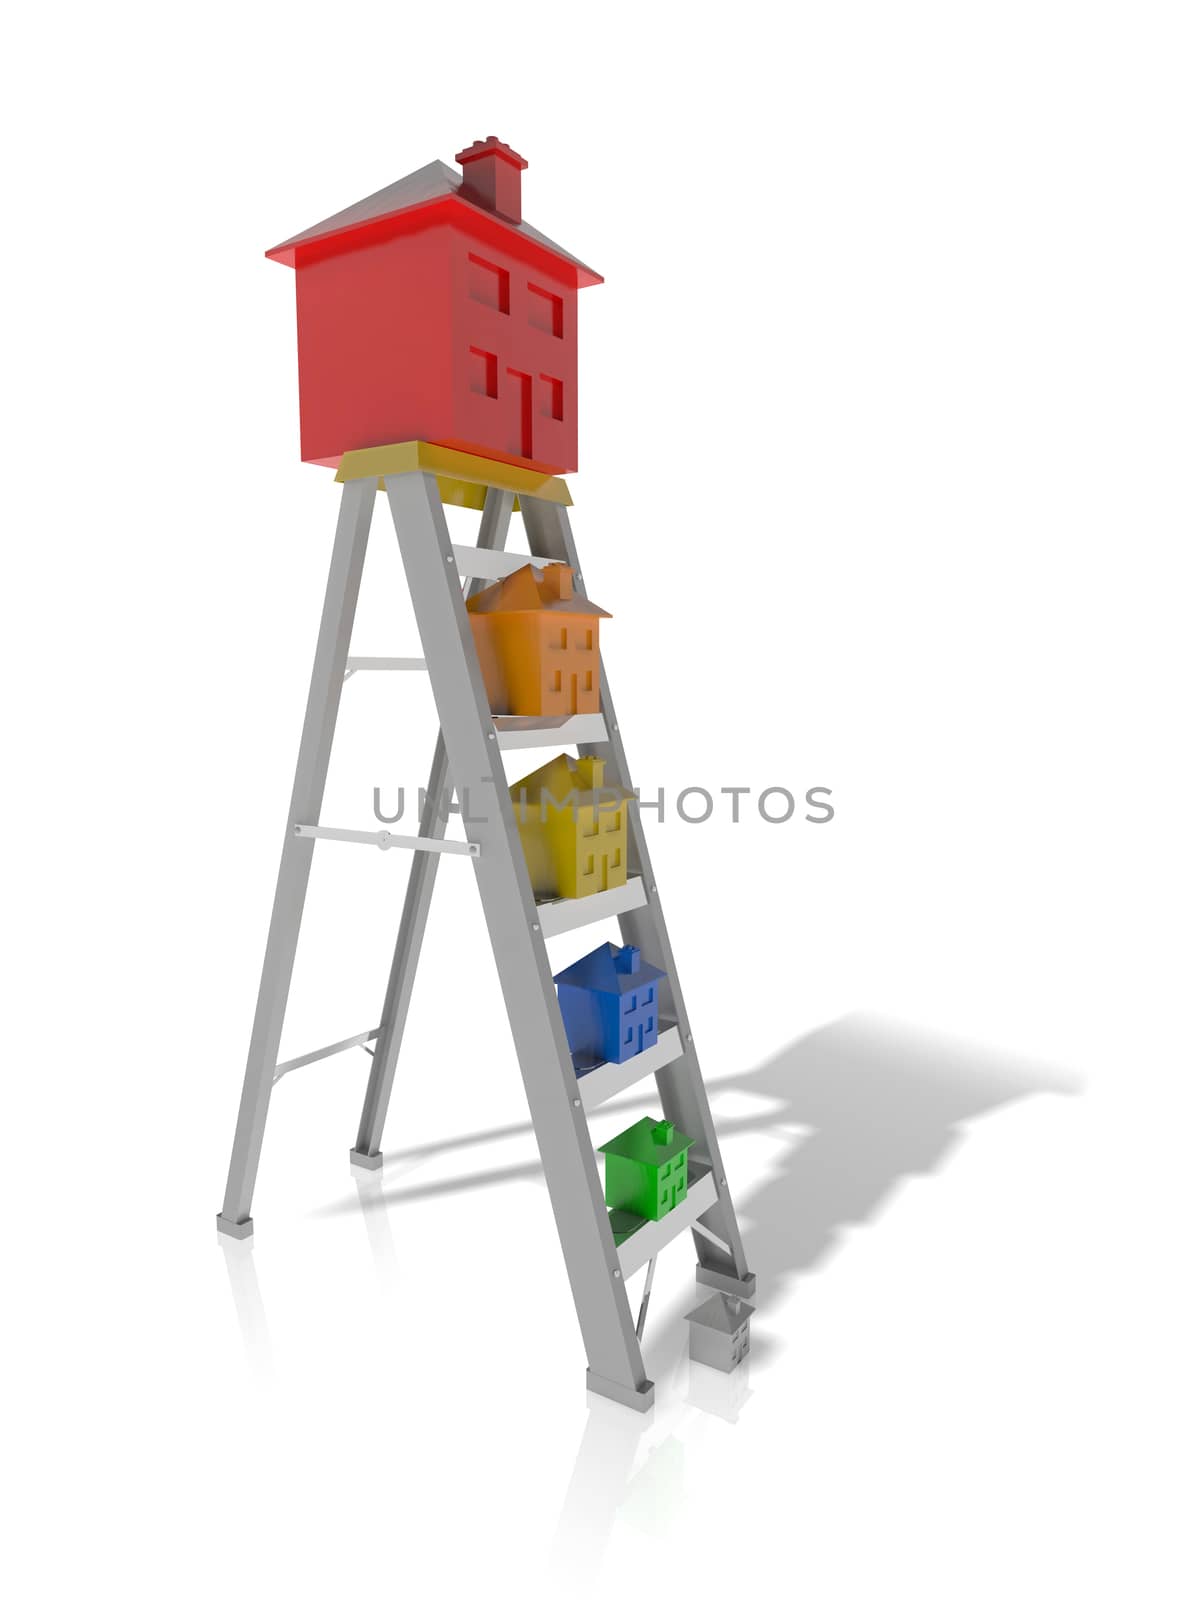 Property ladder by hyrons